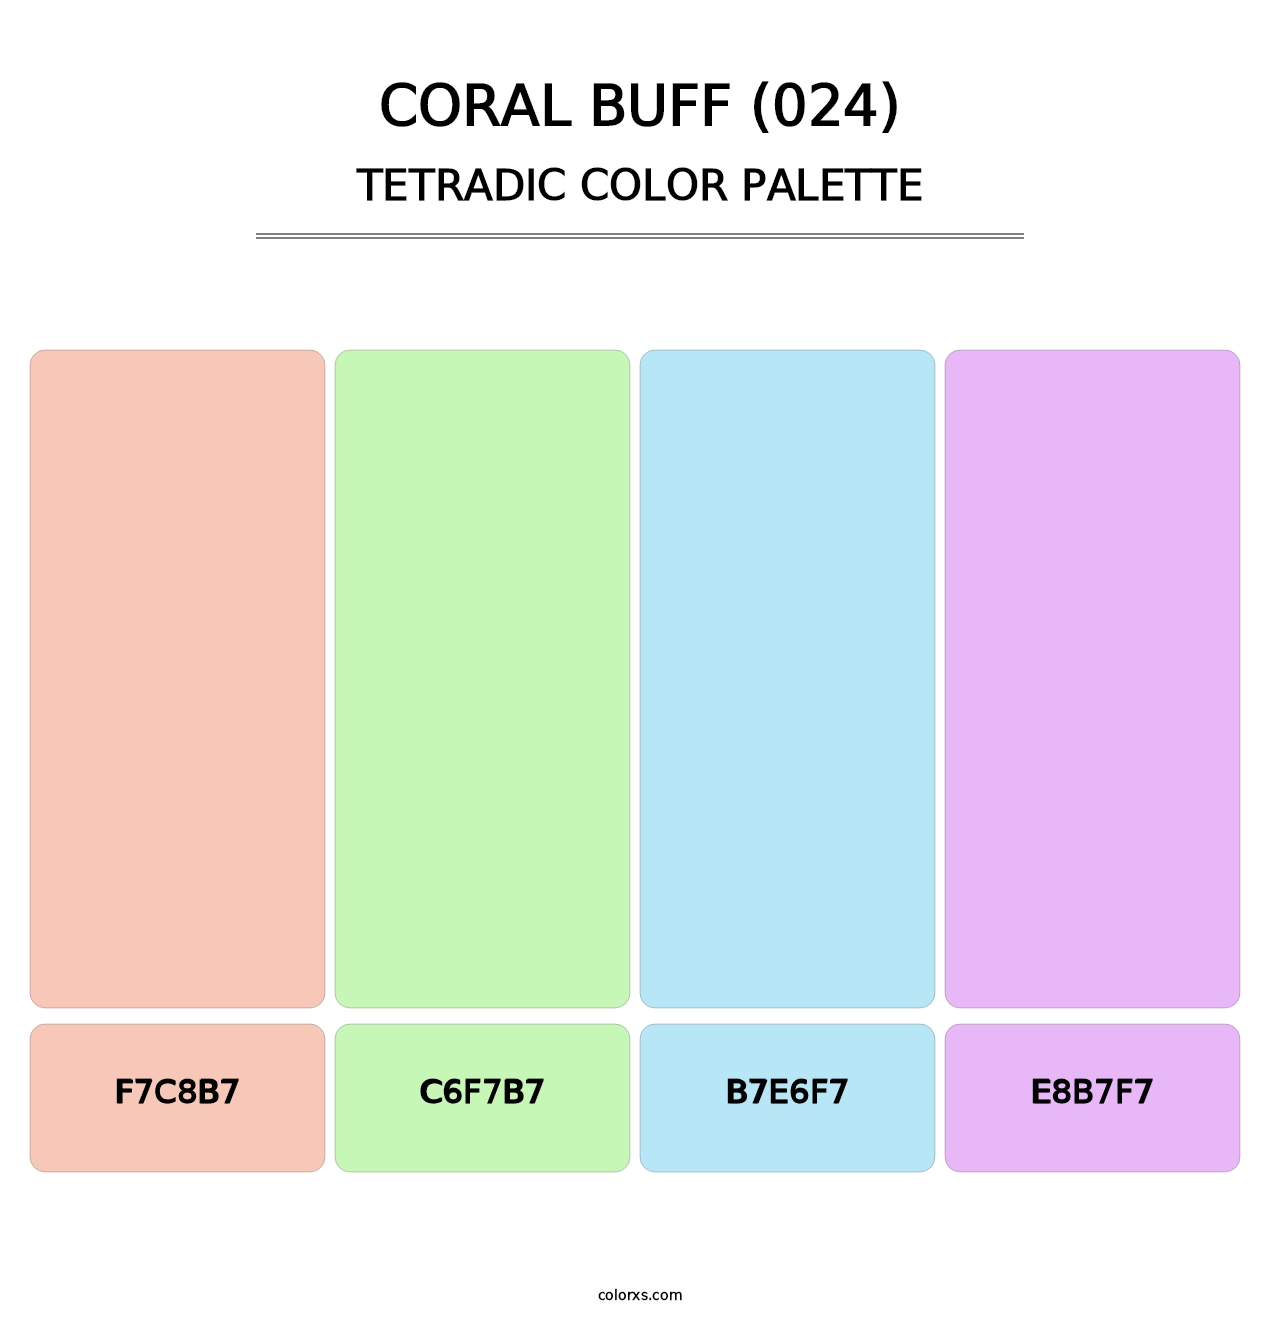 Coral Buff (024) - Tetradic Color Palette